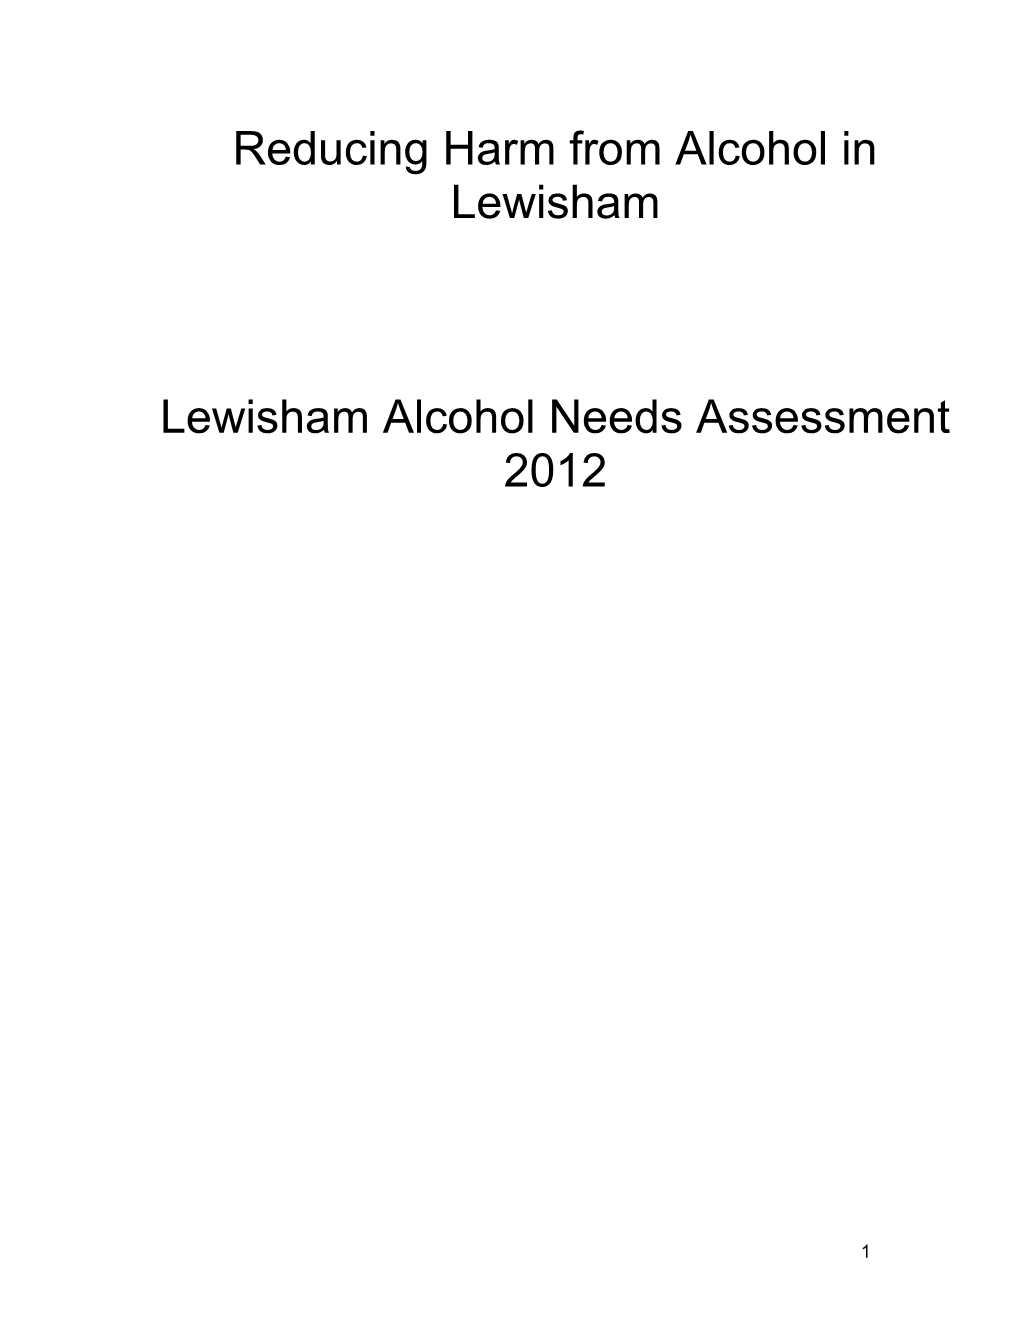 Lewisham Alcohol Needs Assessment 2011